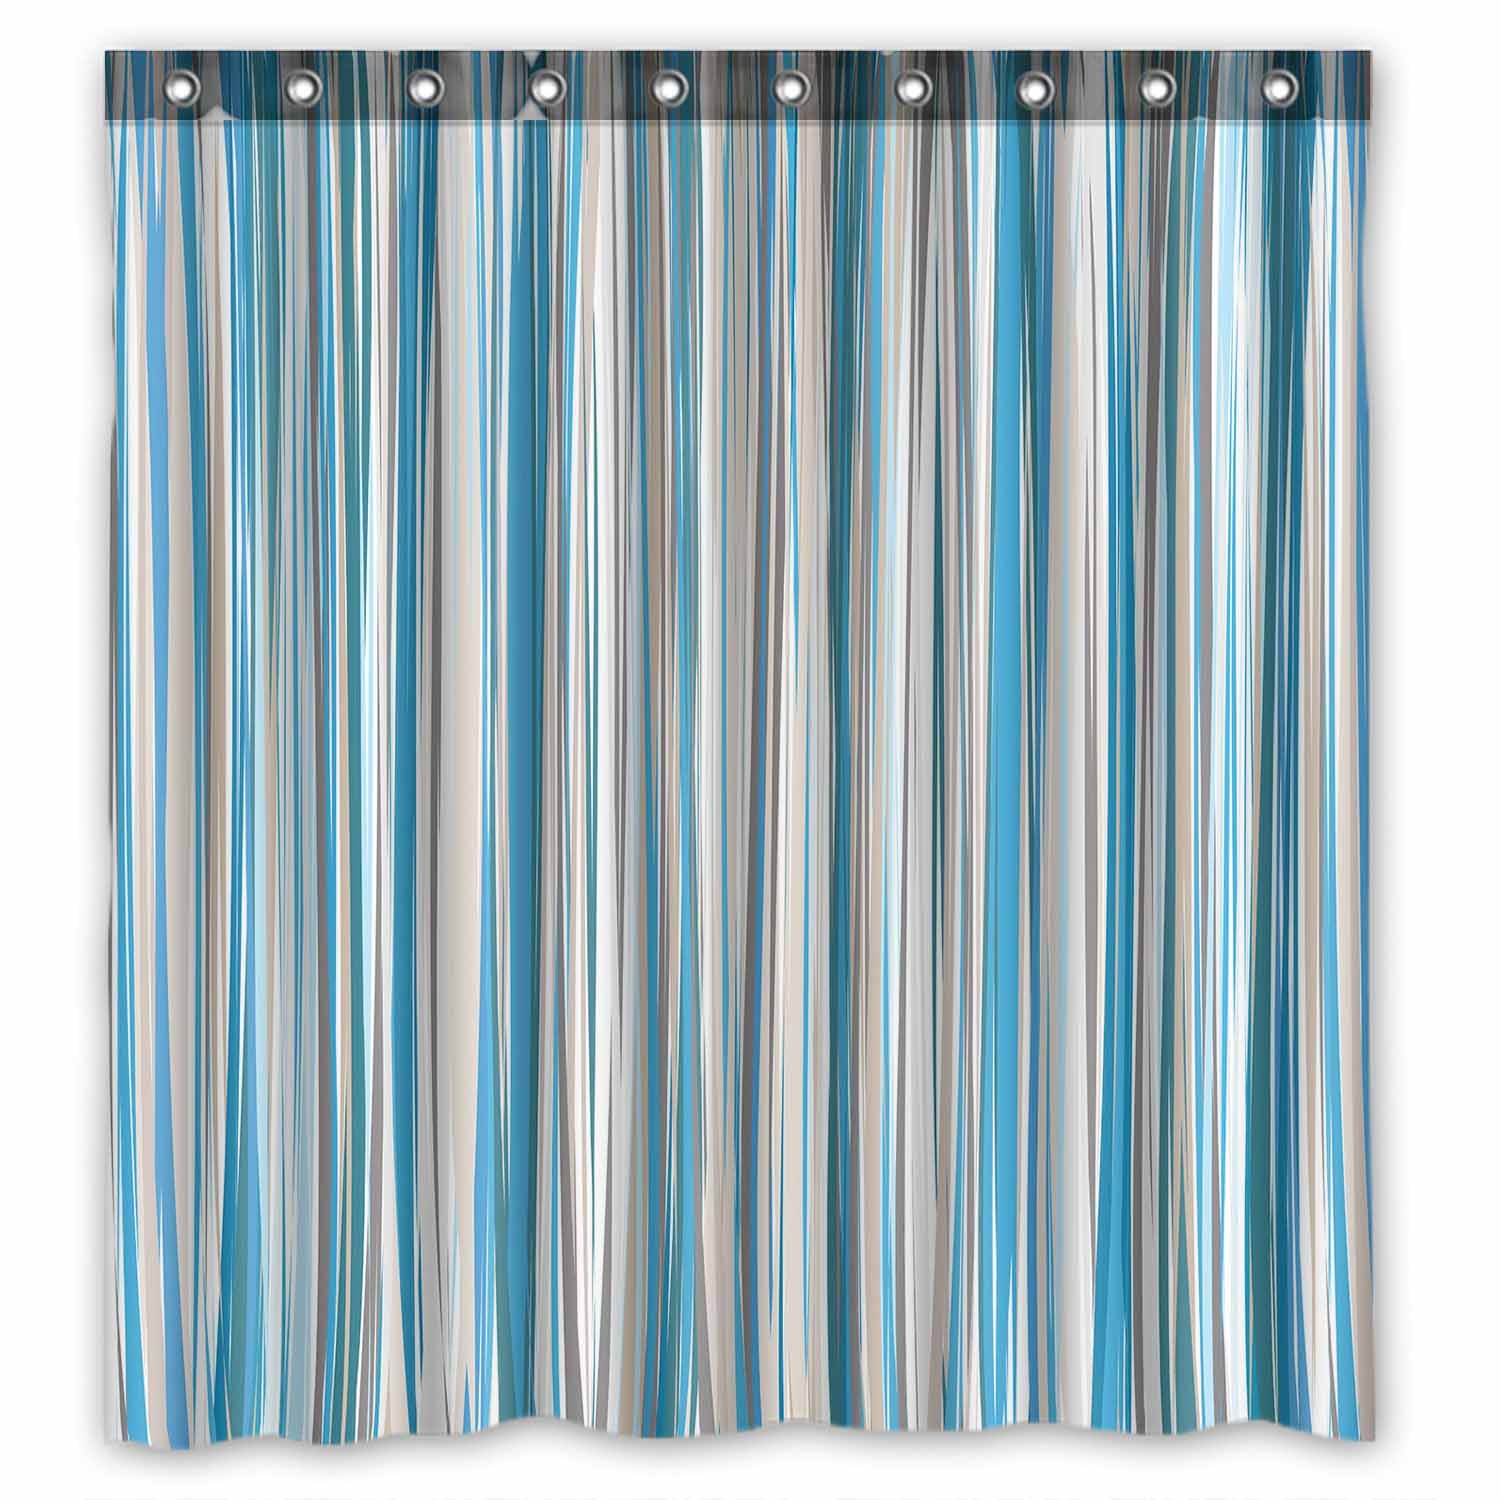 PKQWTM BlueBeigeWhite Vertical Striped Pattern WaterProof Polyester Fabric Shower Curtain Size